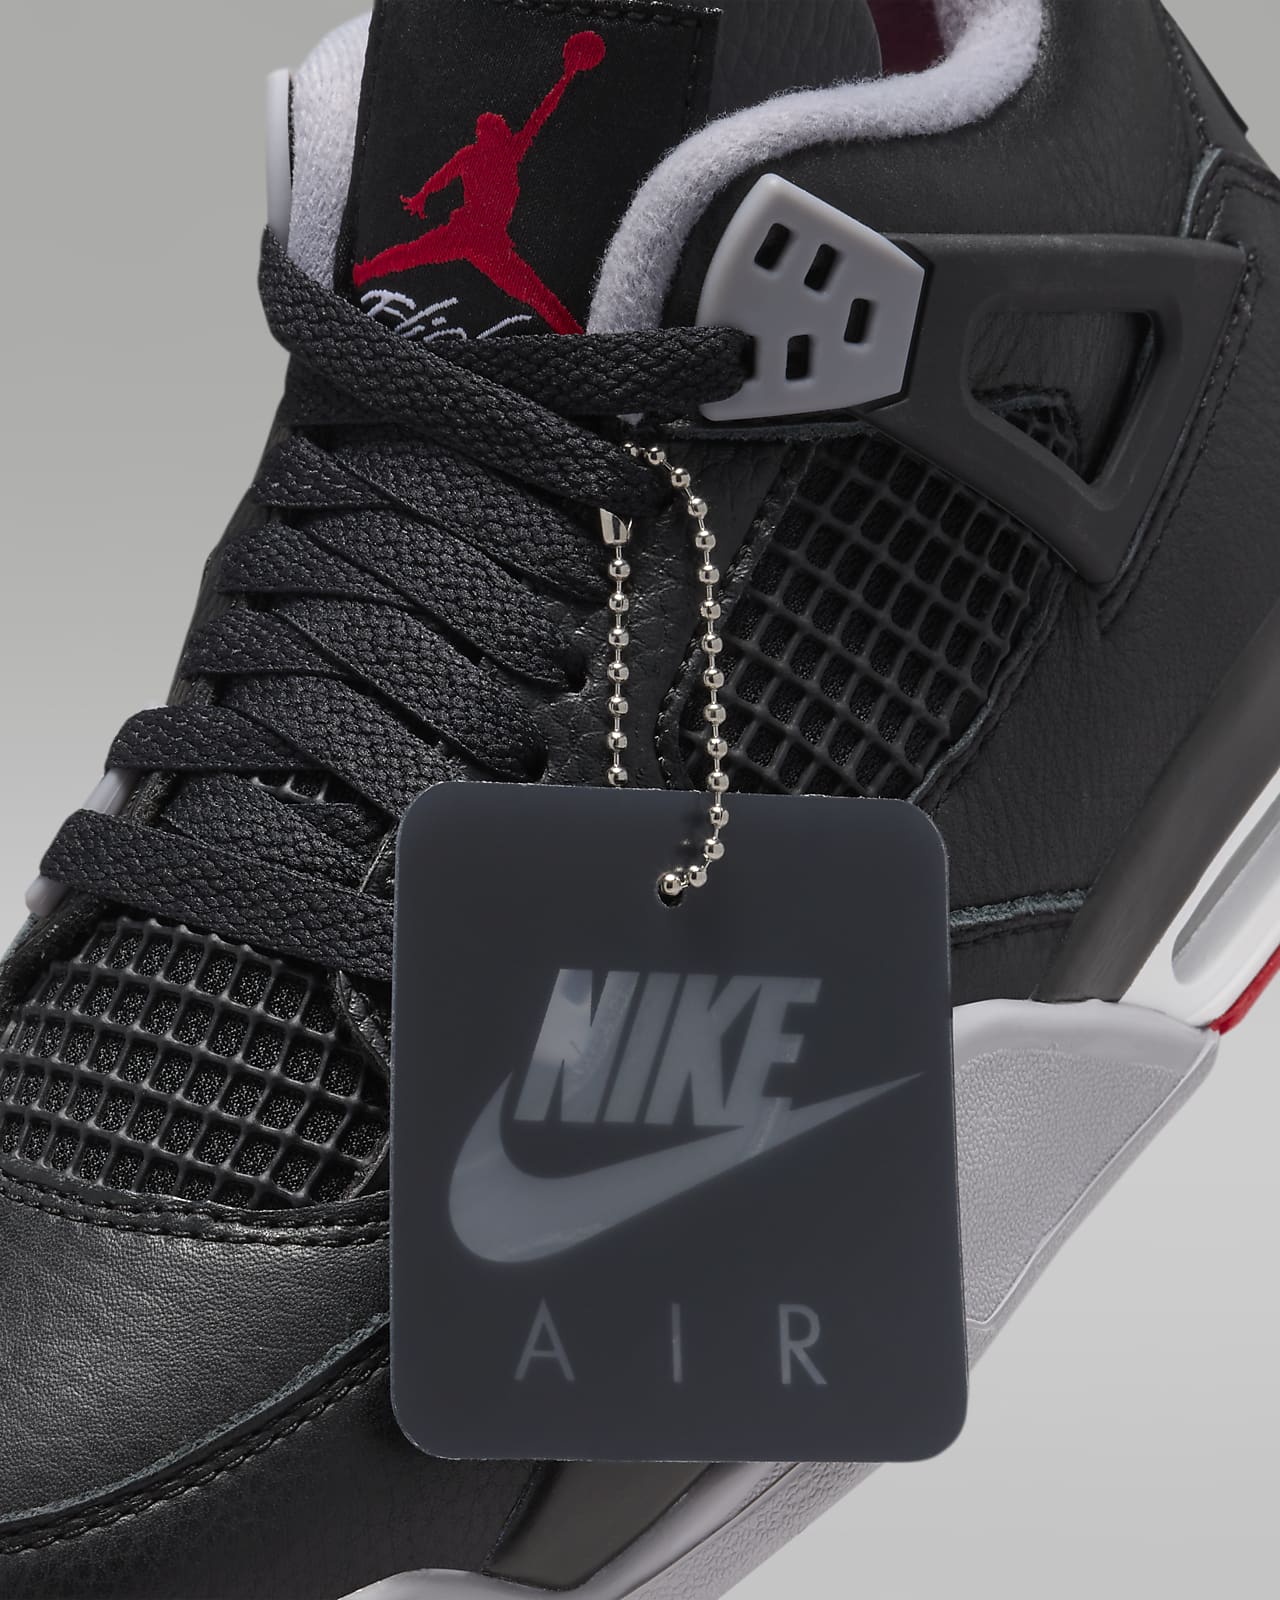 日本正規品Nike Air Jordan 4 Retro\